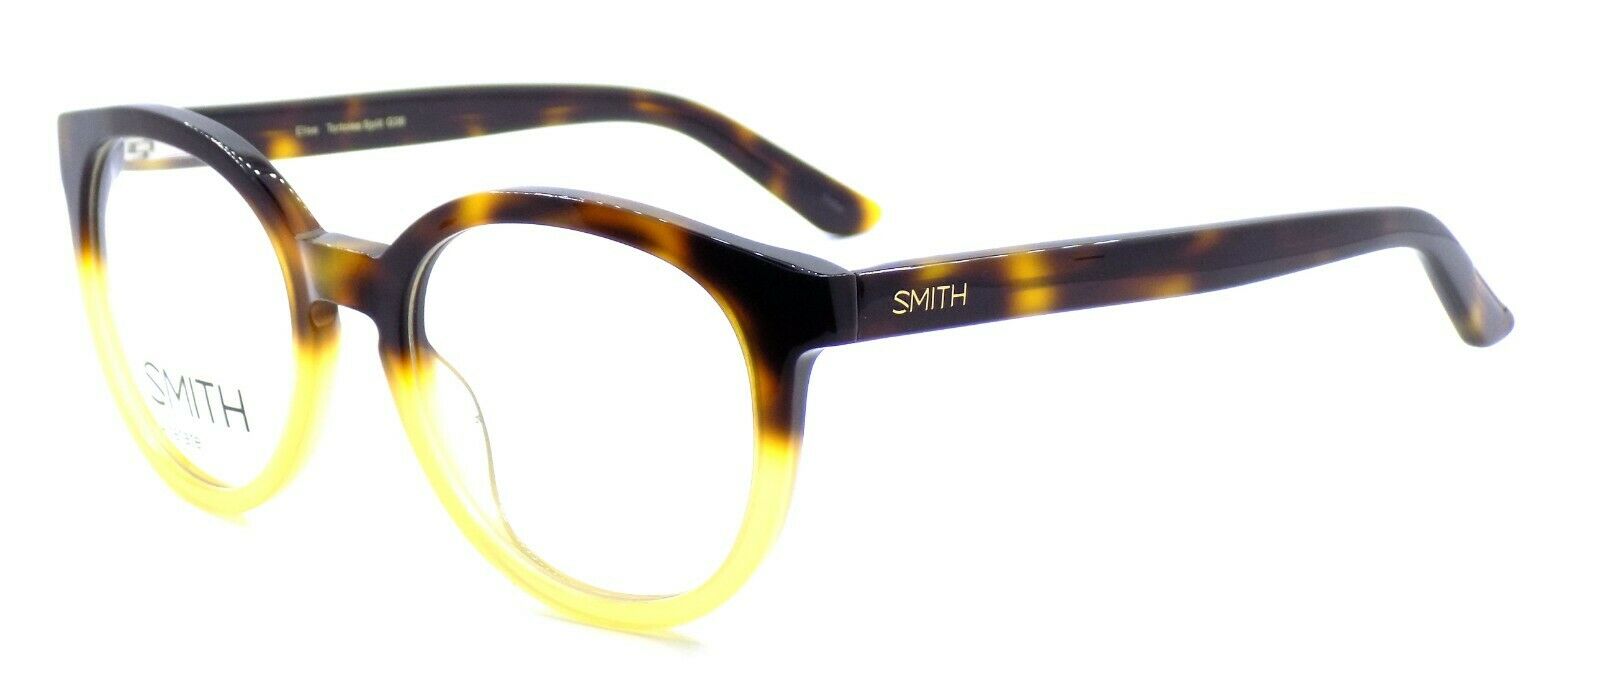 1-SMITH Optics Elise G36 Women's Eyeglasses Frames 51-20-135 Tortoise Split + CASE-762753569943-IKSpecs